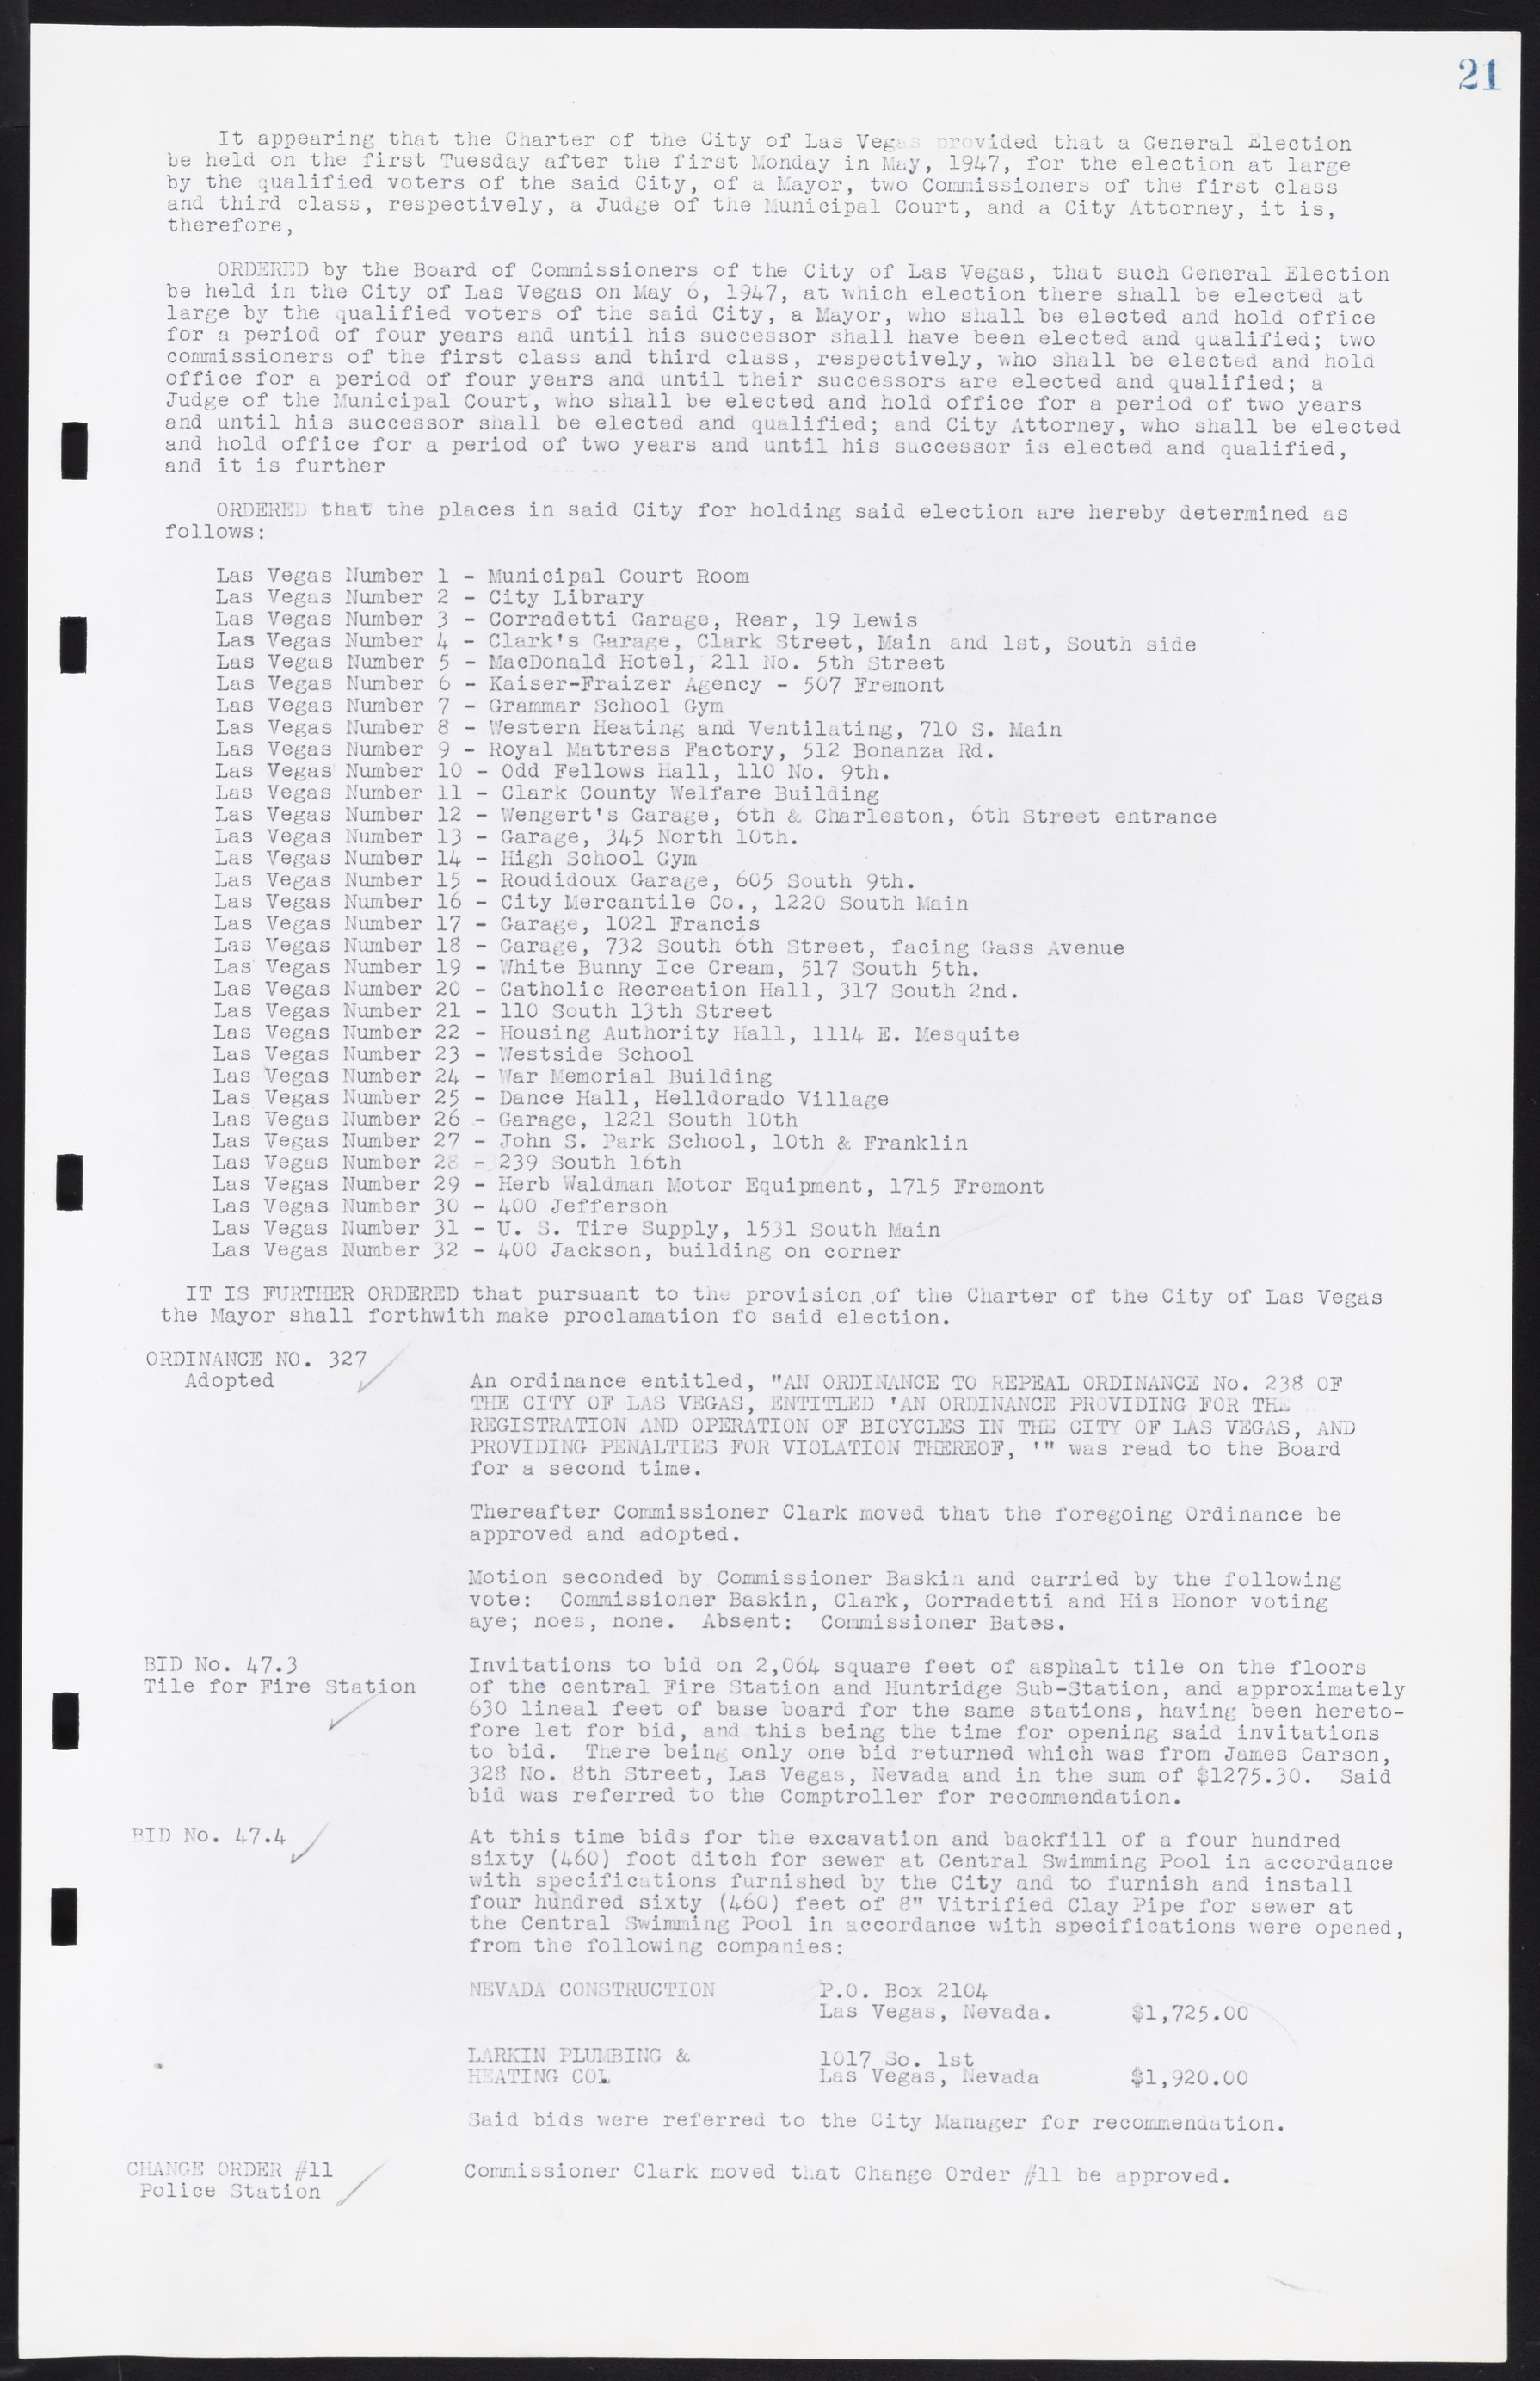 Las Vegas City Commission Minutes, January 7, 1947 to October 26, 1949, lvc000006-29